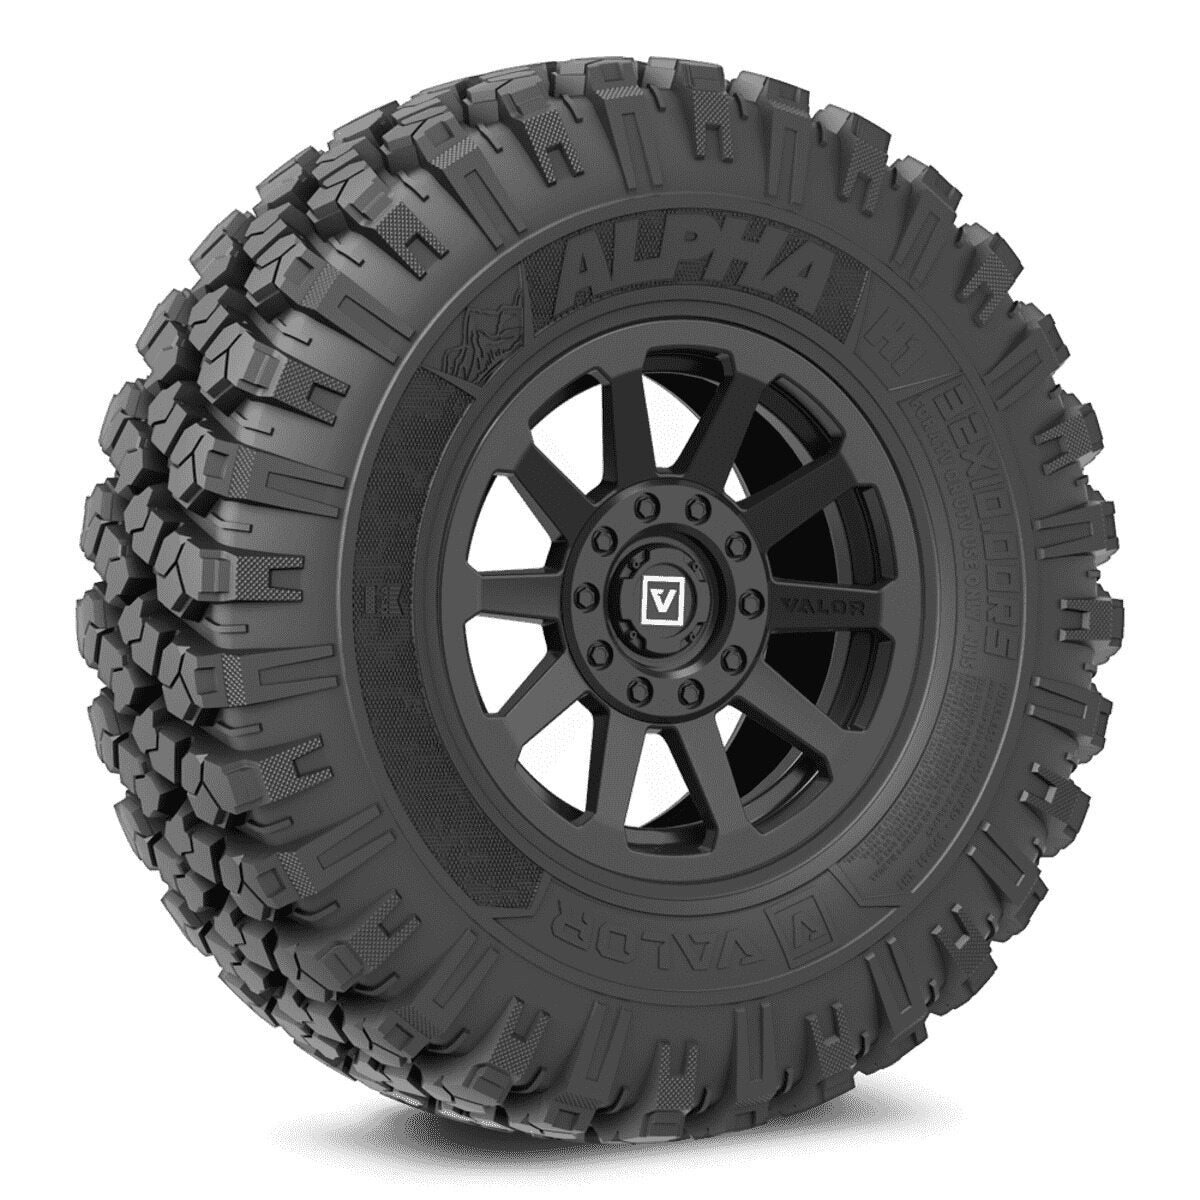 Valor Off-Road Alpha on V02 Wheel and Tire Kits